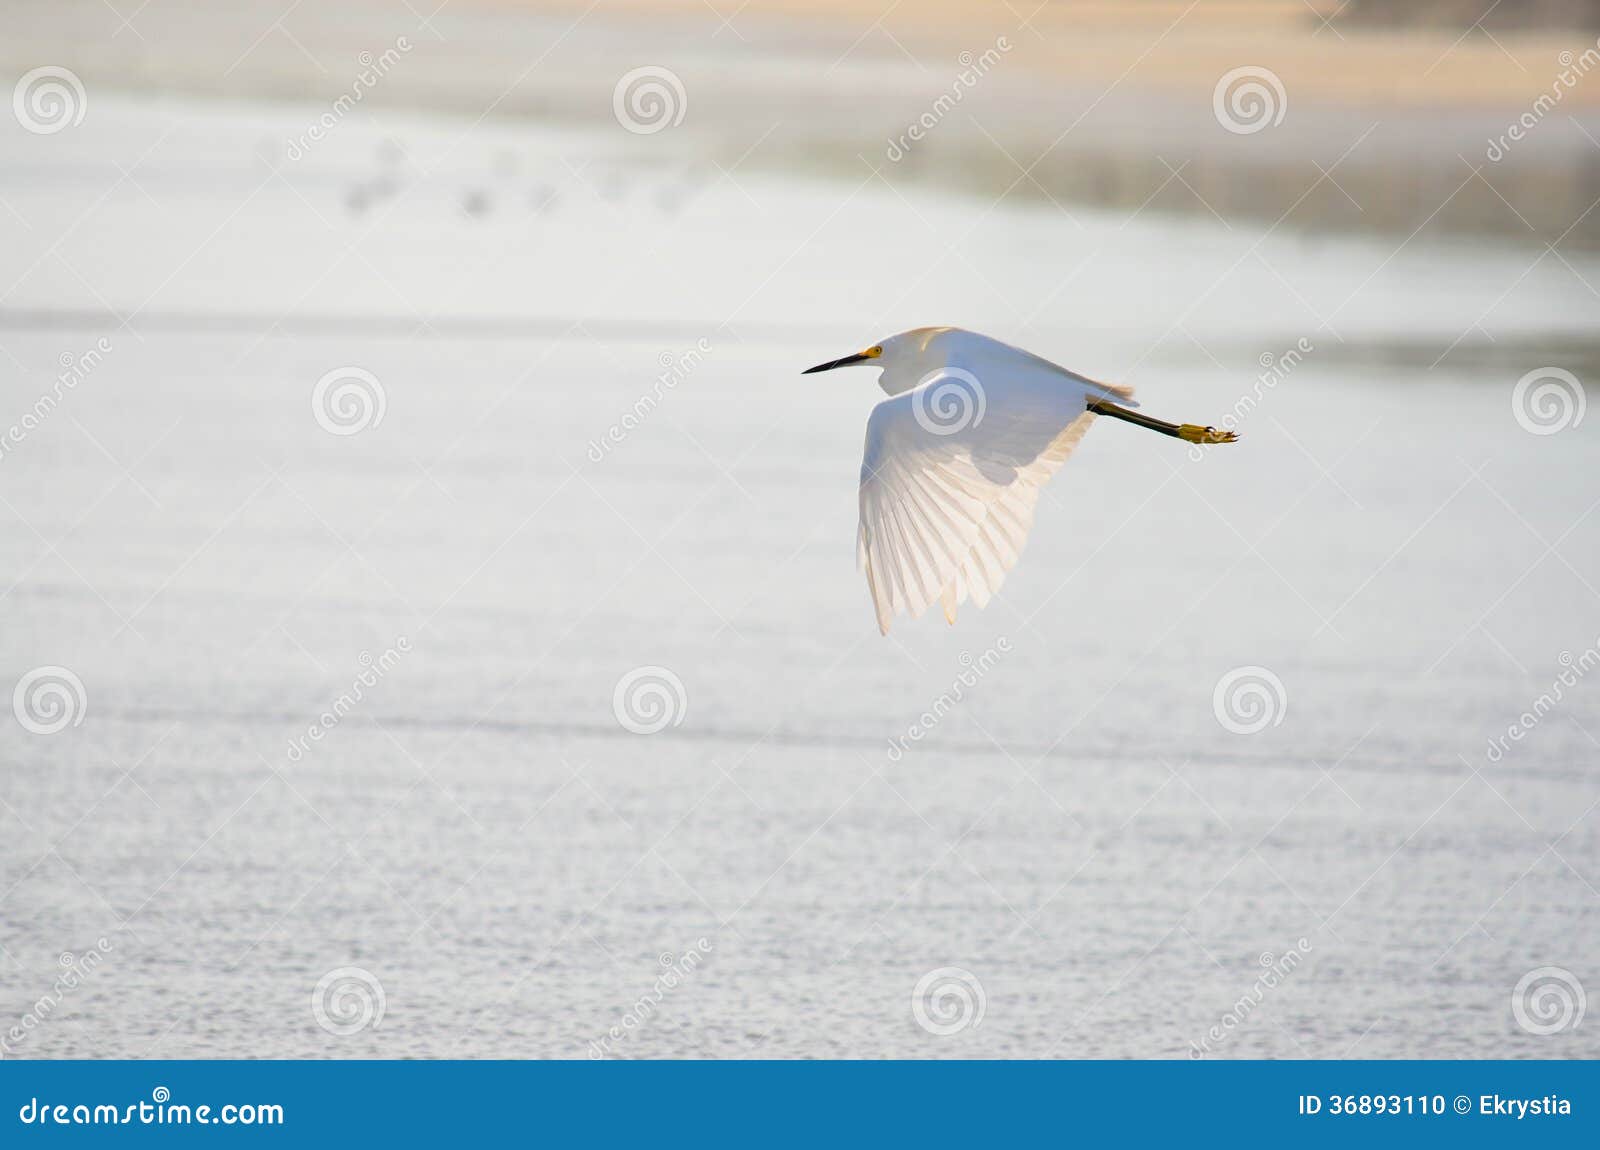 flying bird, el espino beach